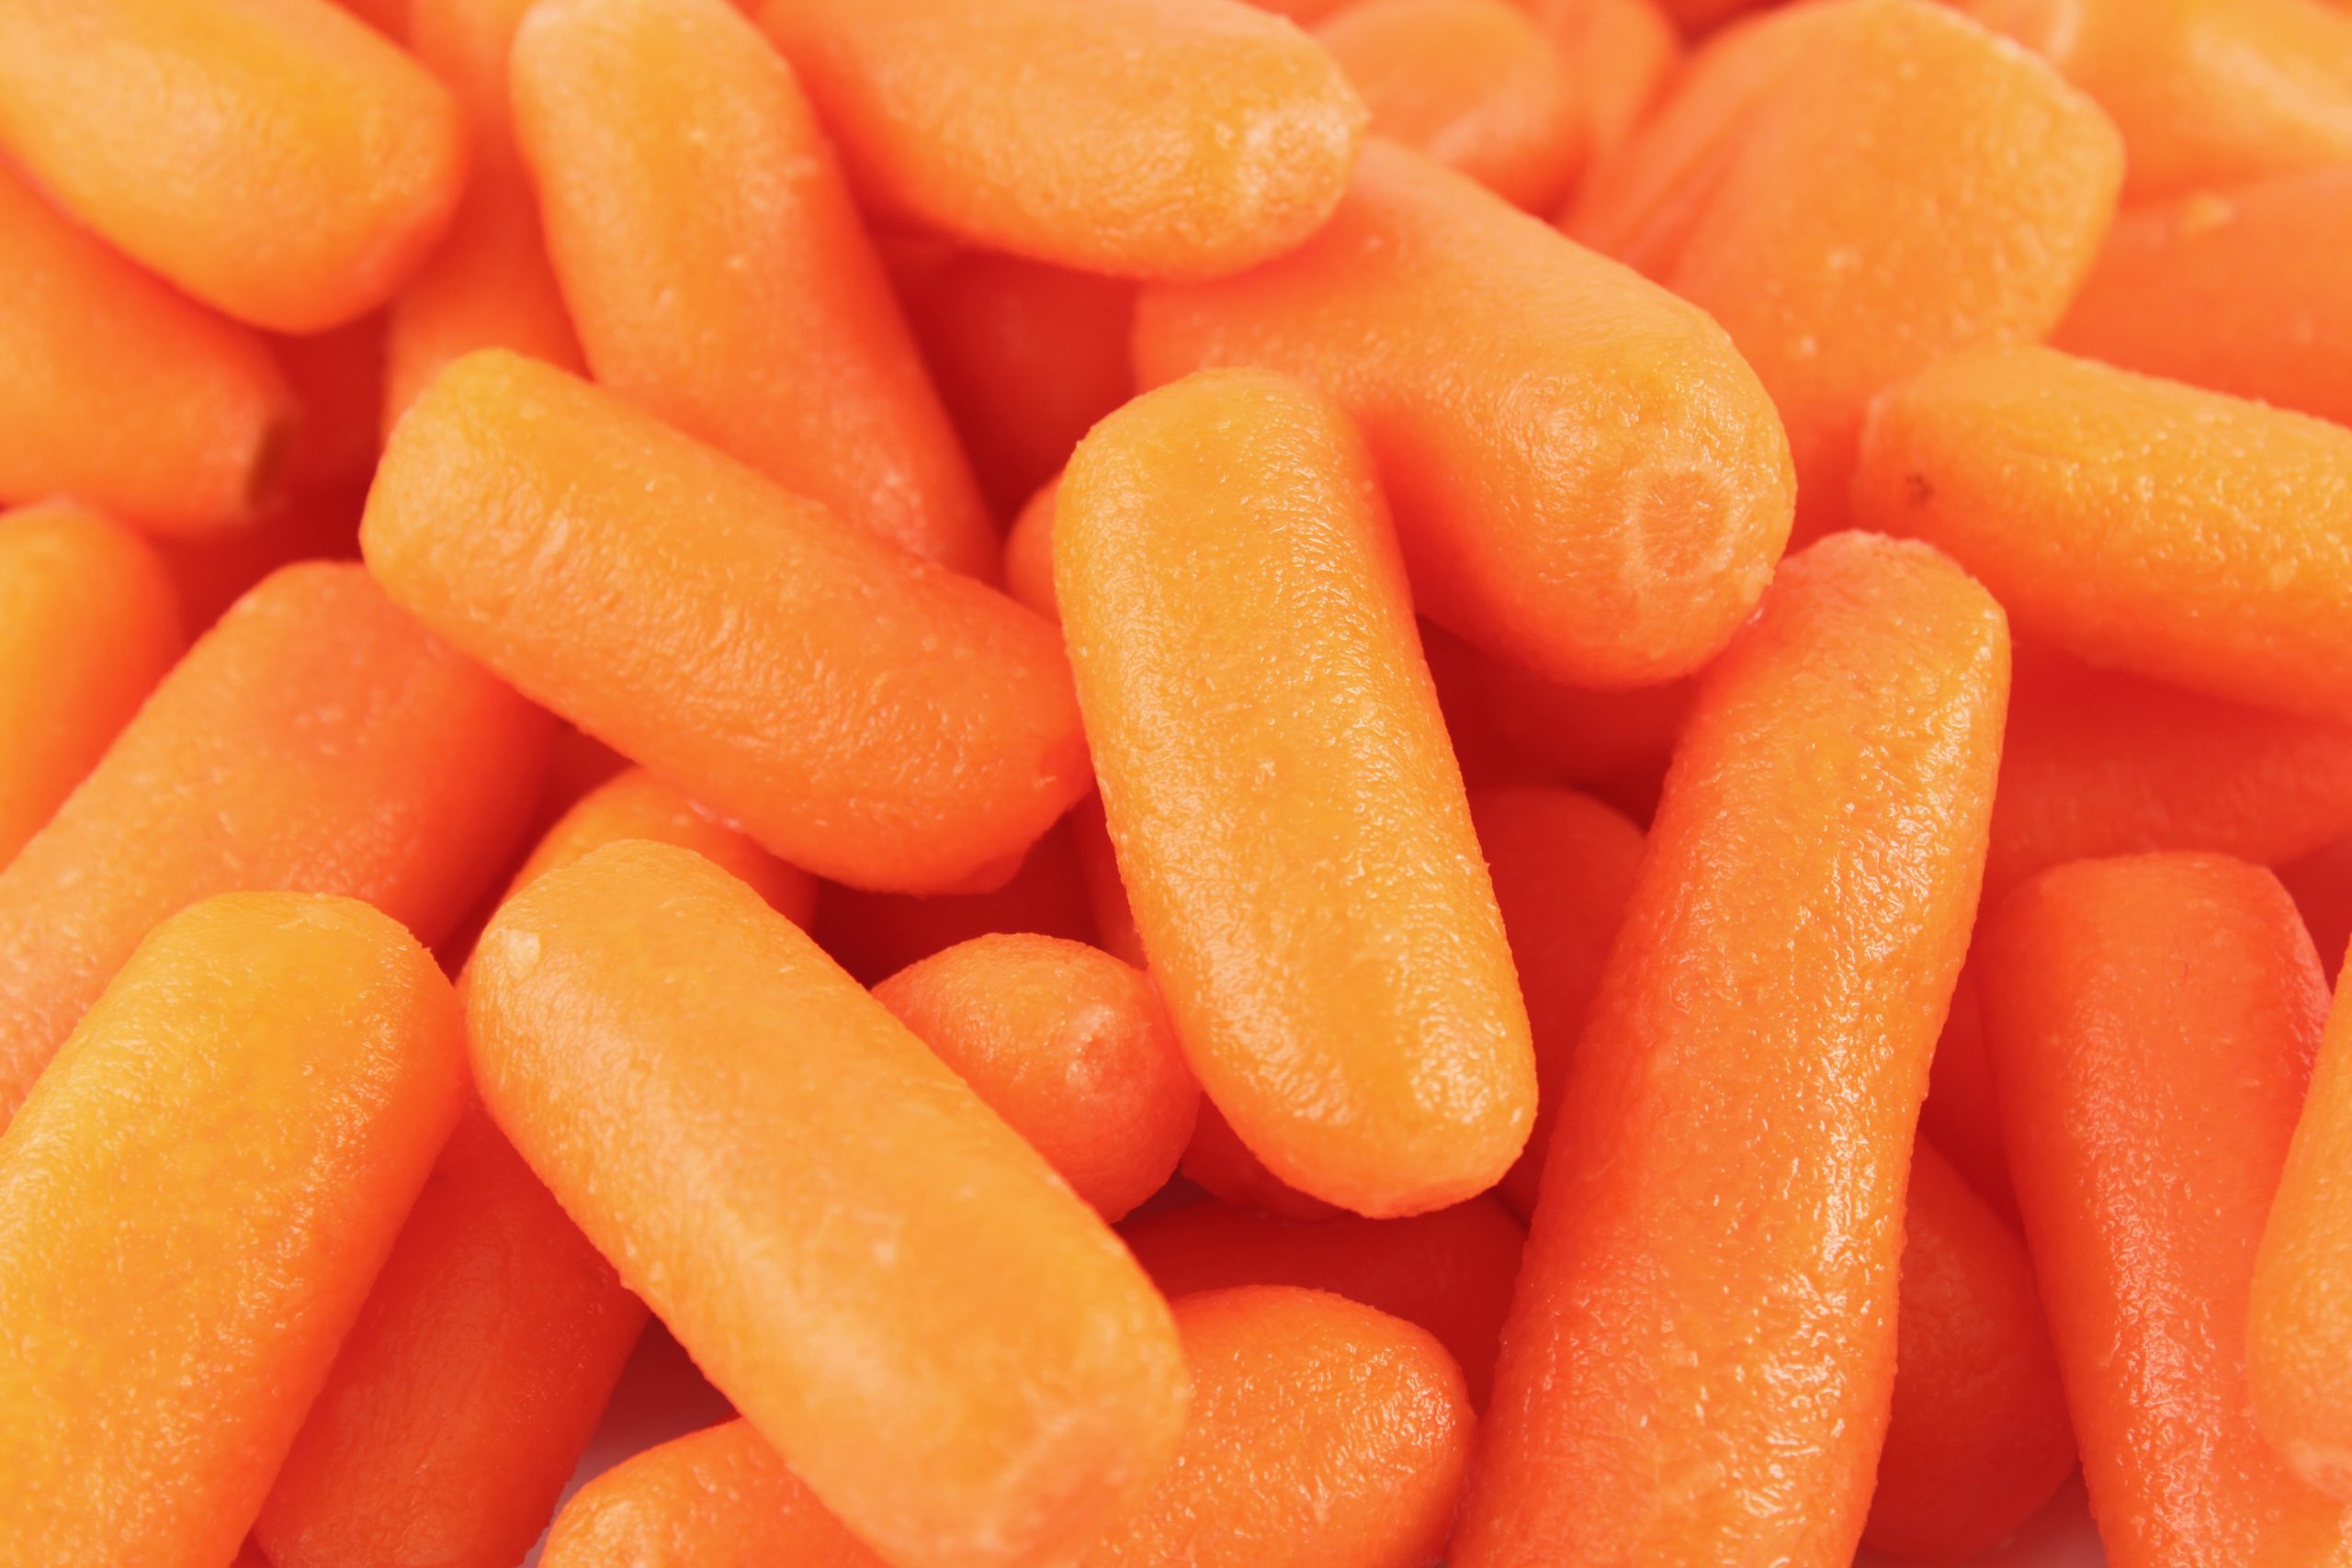 Fresh baby carrots